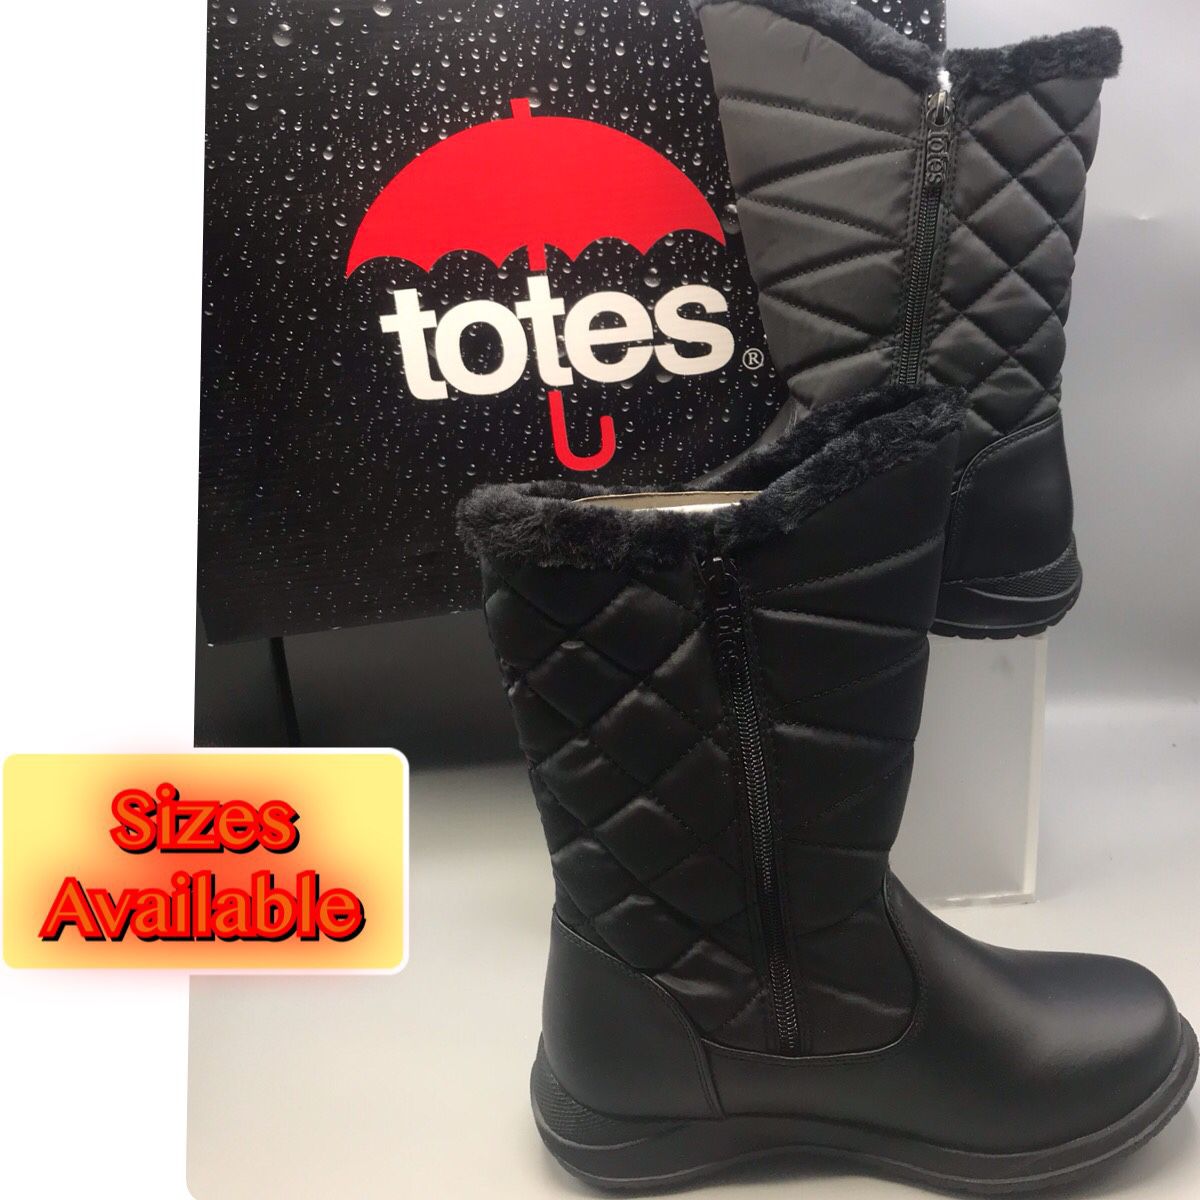 Totes Women’s Waterproof Snow/rain Mid calf Boots